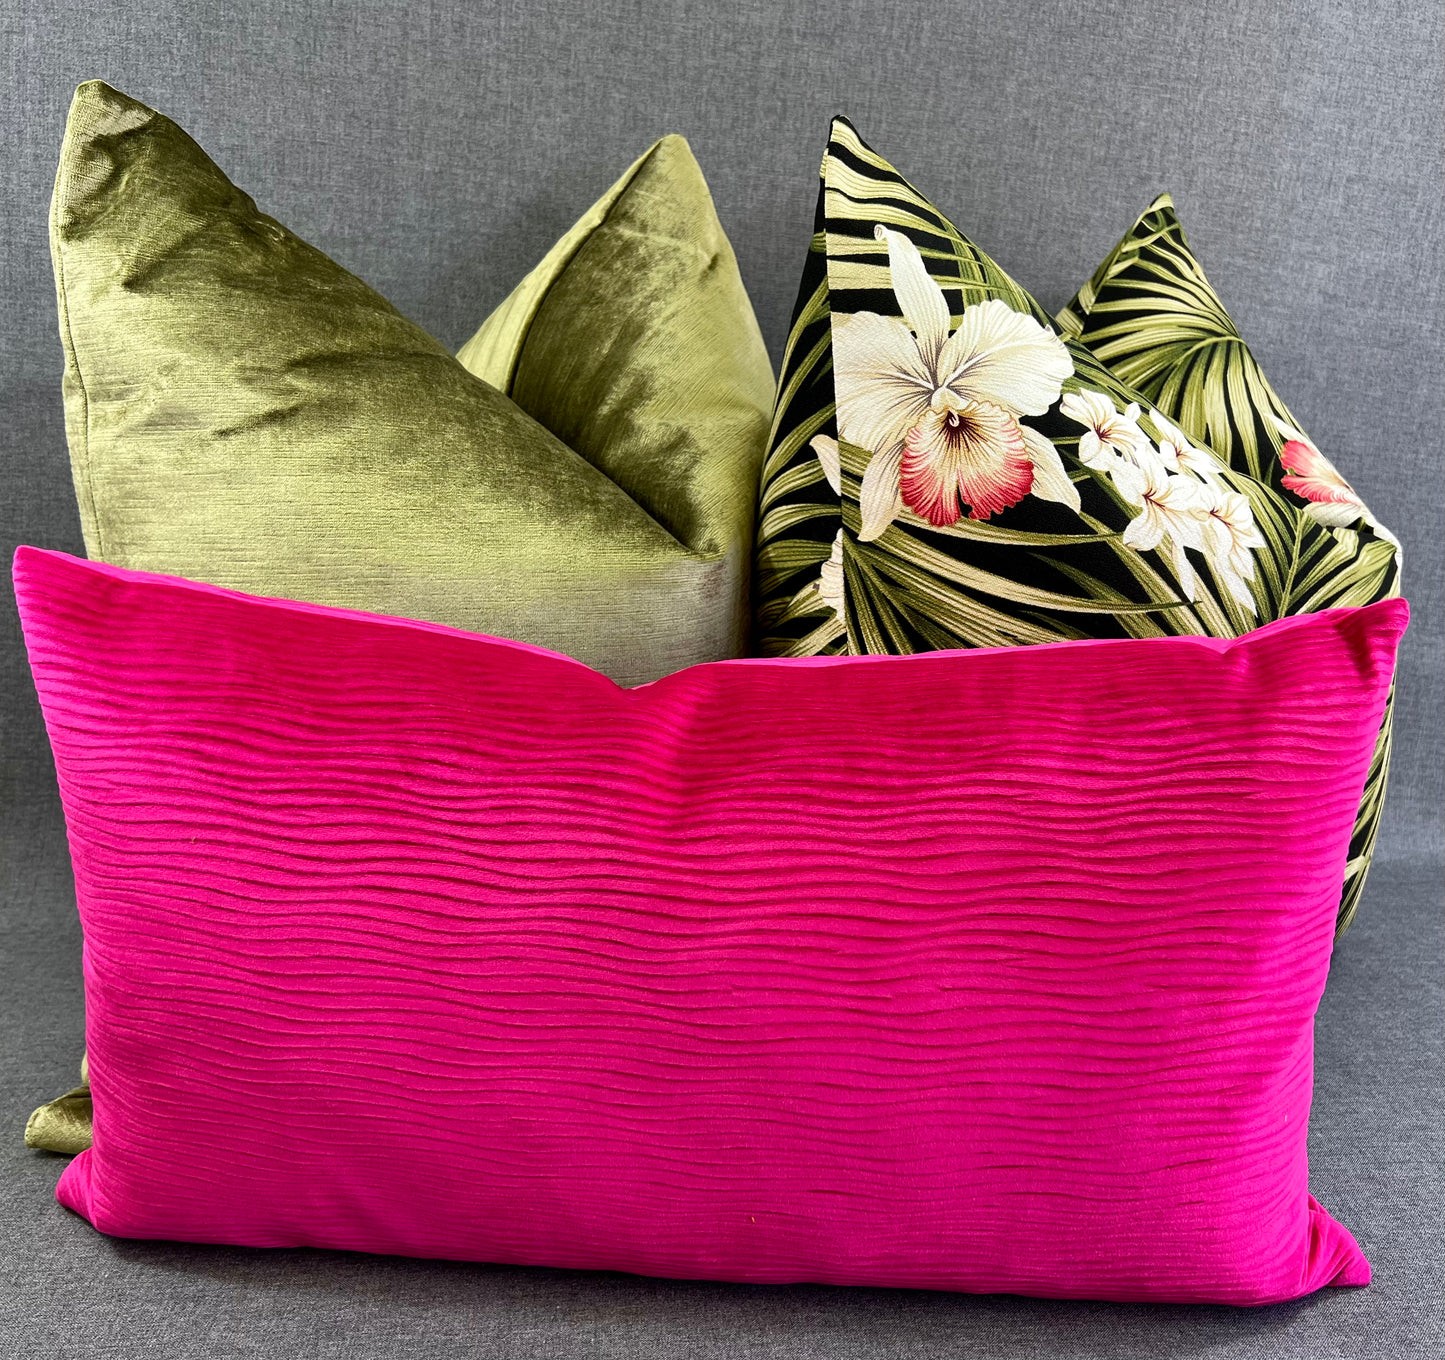 Luxury Lumbar Pillow - 24" x 14" - Stream Fuchsia; Bright Fuchsia solid with a wavy pattern in the soft fabric.